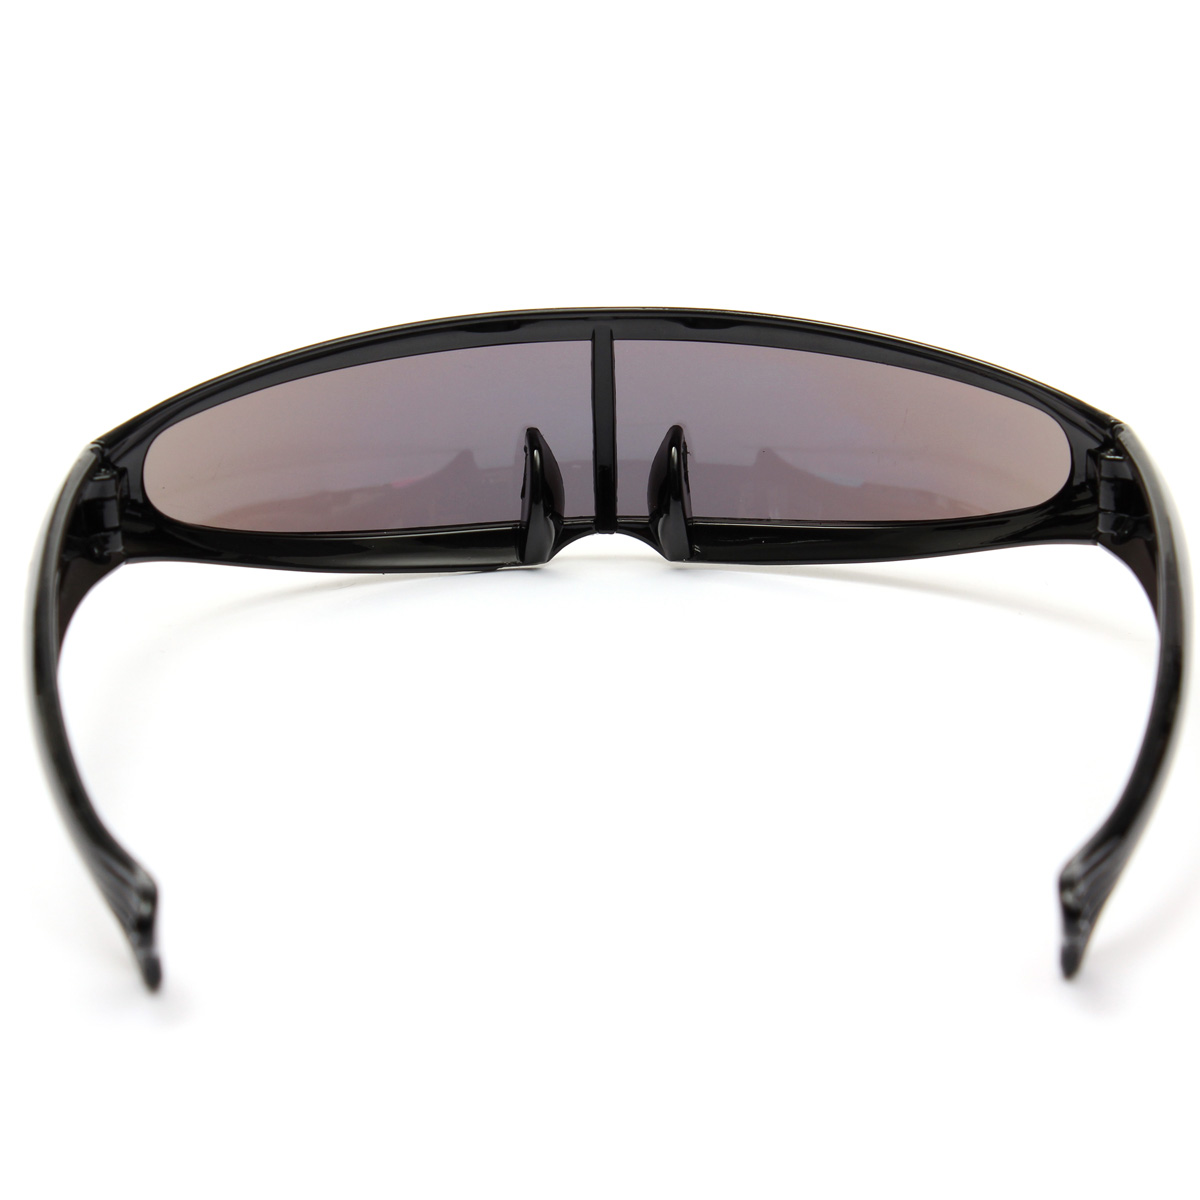 Cool-Stylish-UV400-Protection-Sunglasses-Googgles-991905